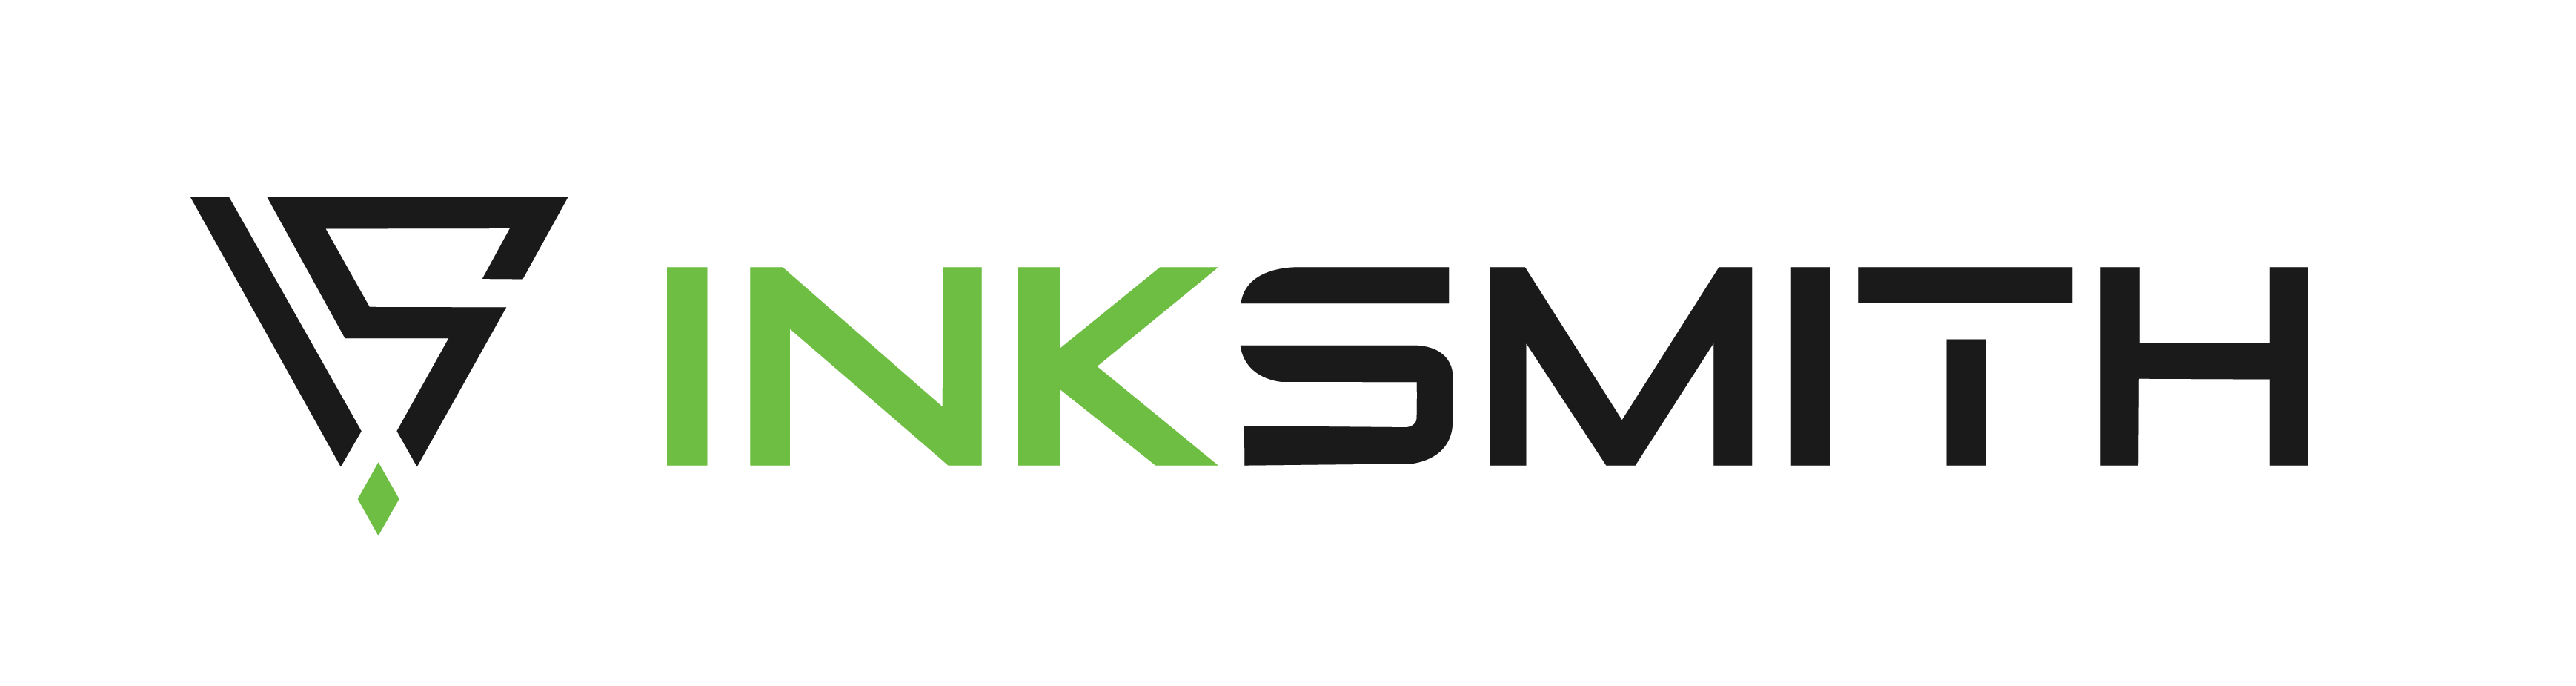 Inksmith Logo